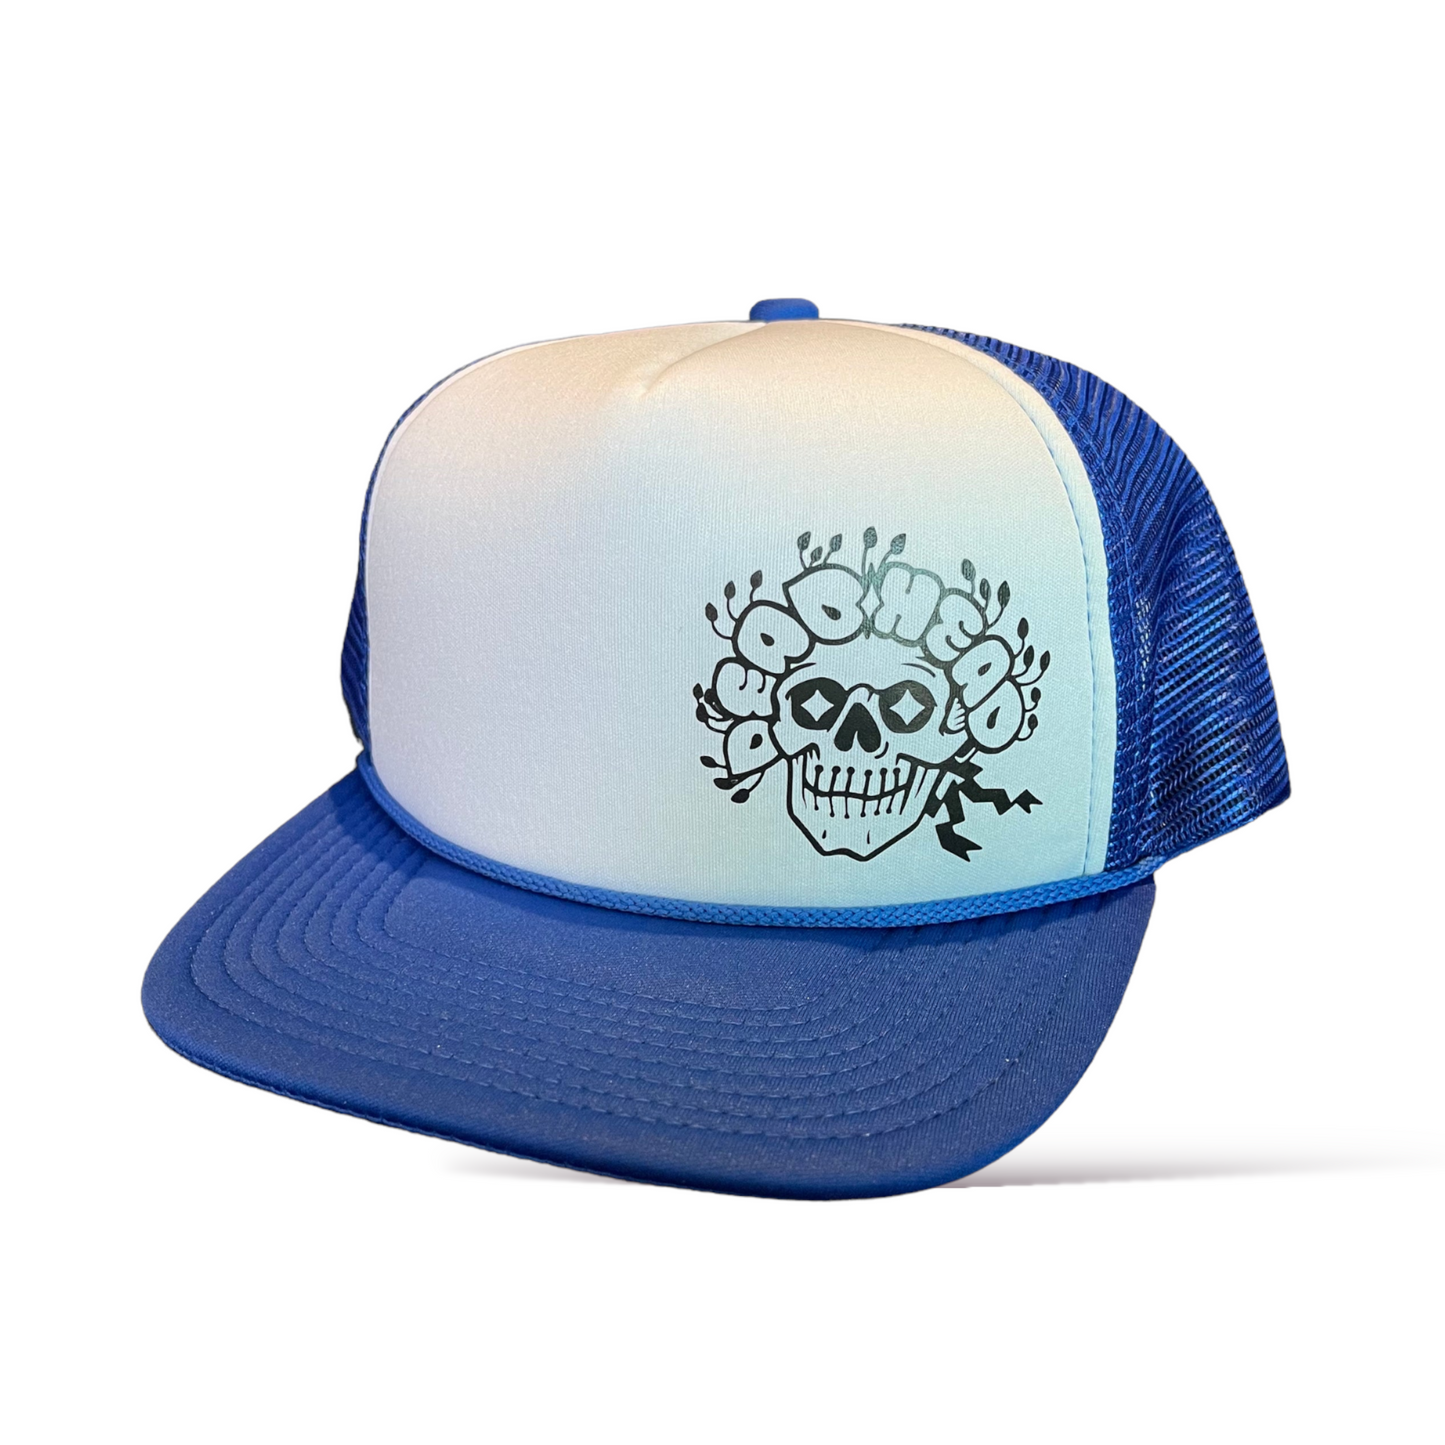 Blue/white trucker hat